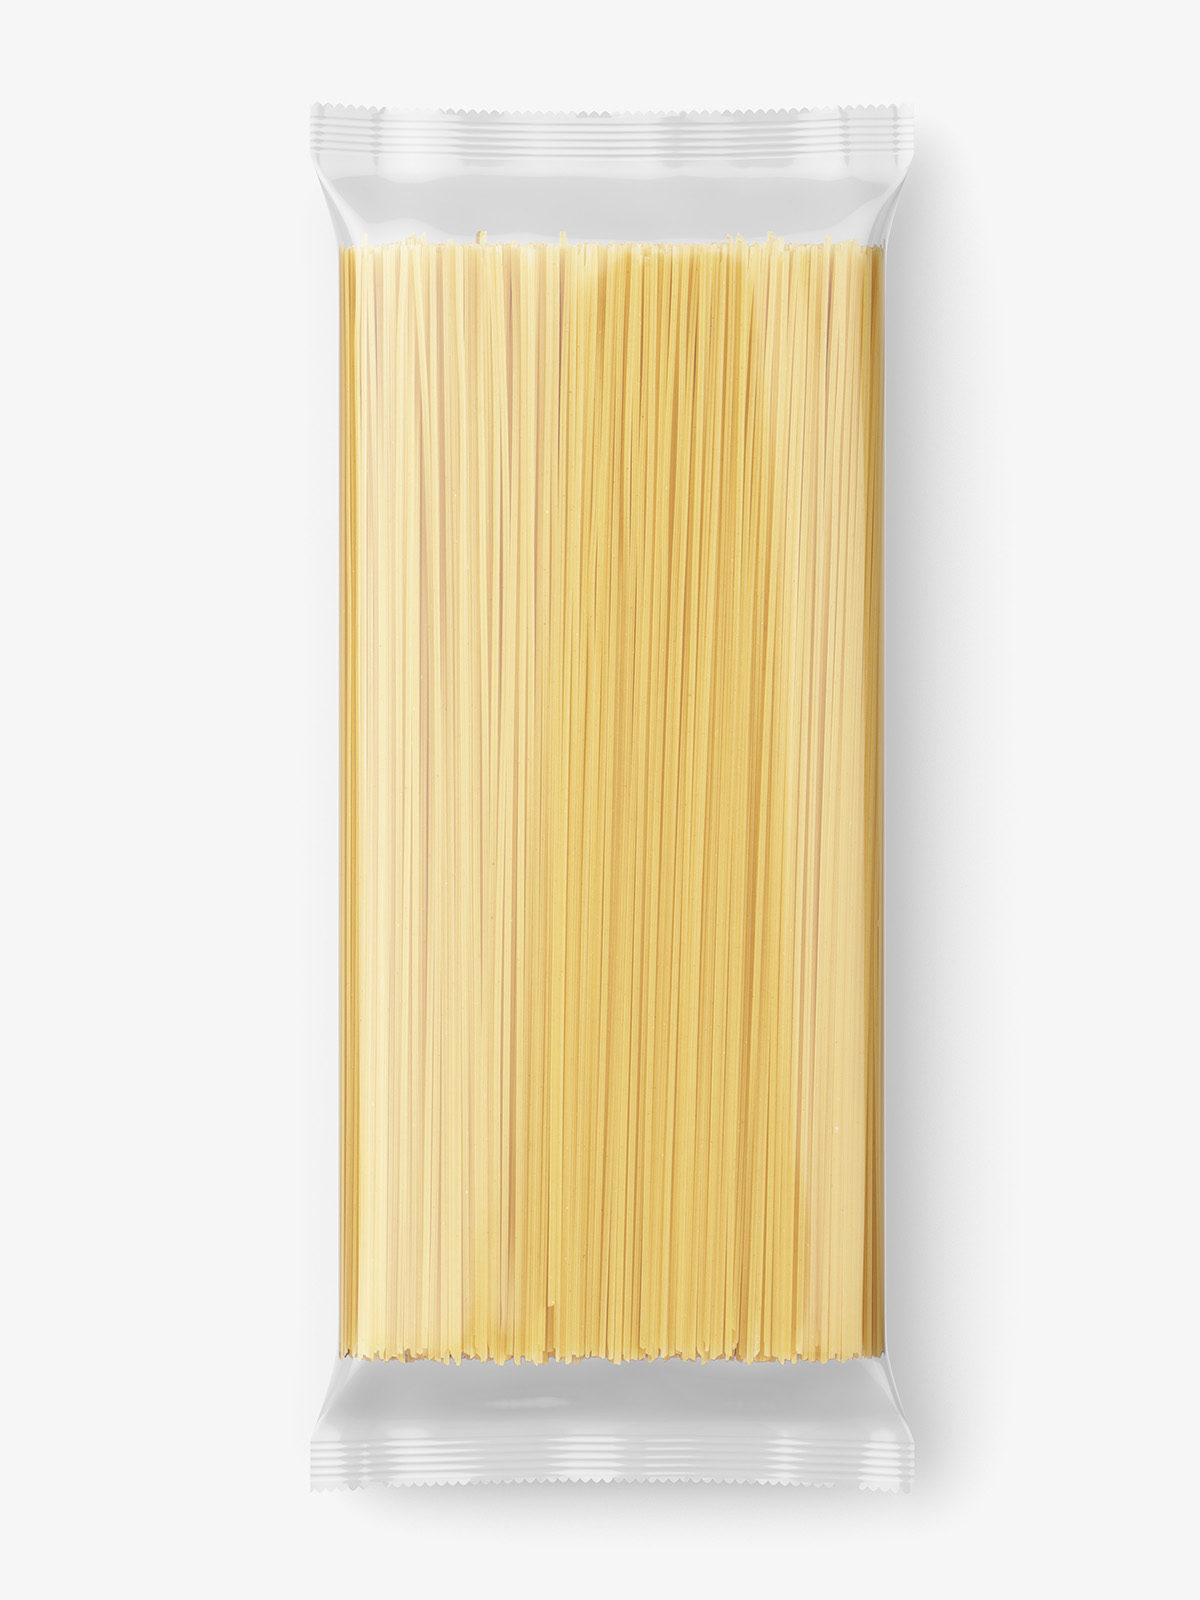 Download Spaghetti Packaging Mockup Smarty Mockups